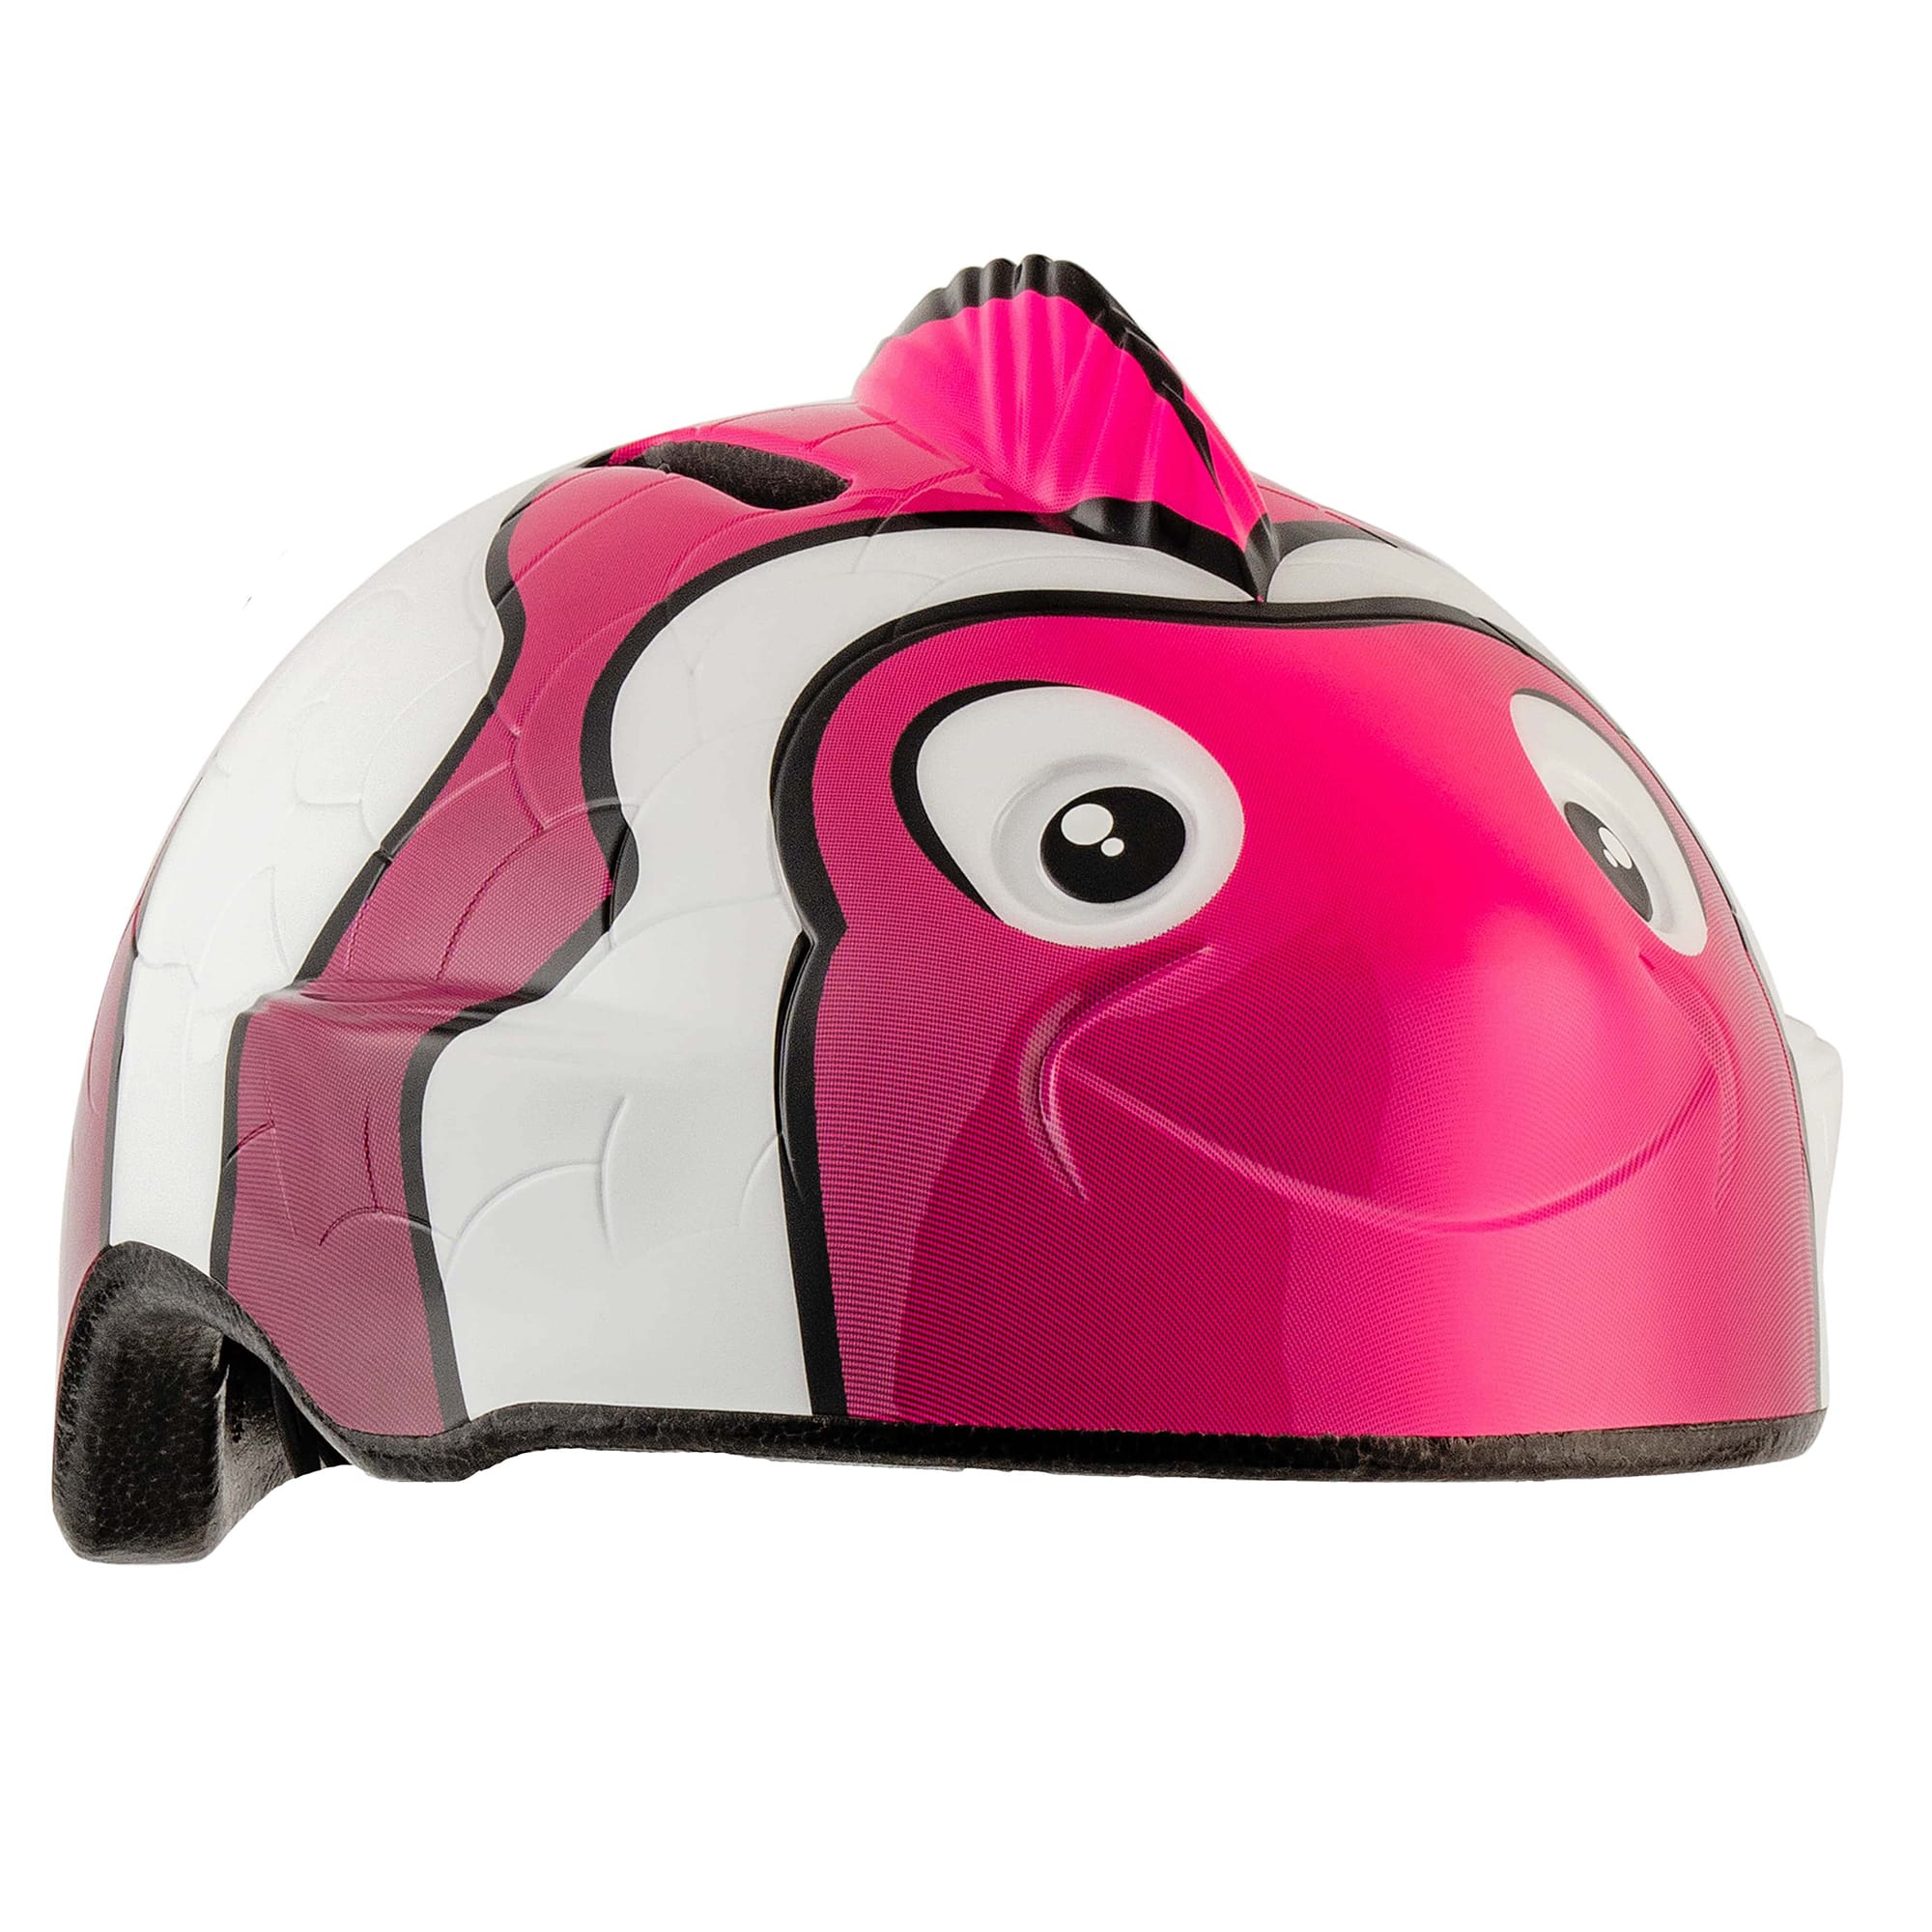 Crazy Safety - Fish Bicycle Helmet - Pink (102001-02) - Leker